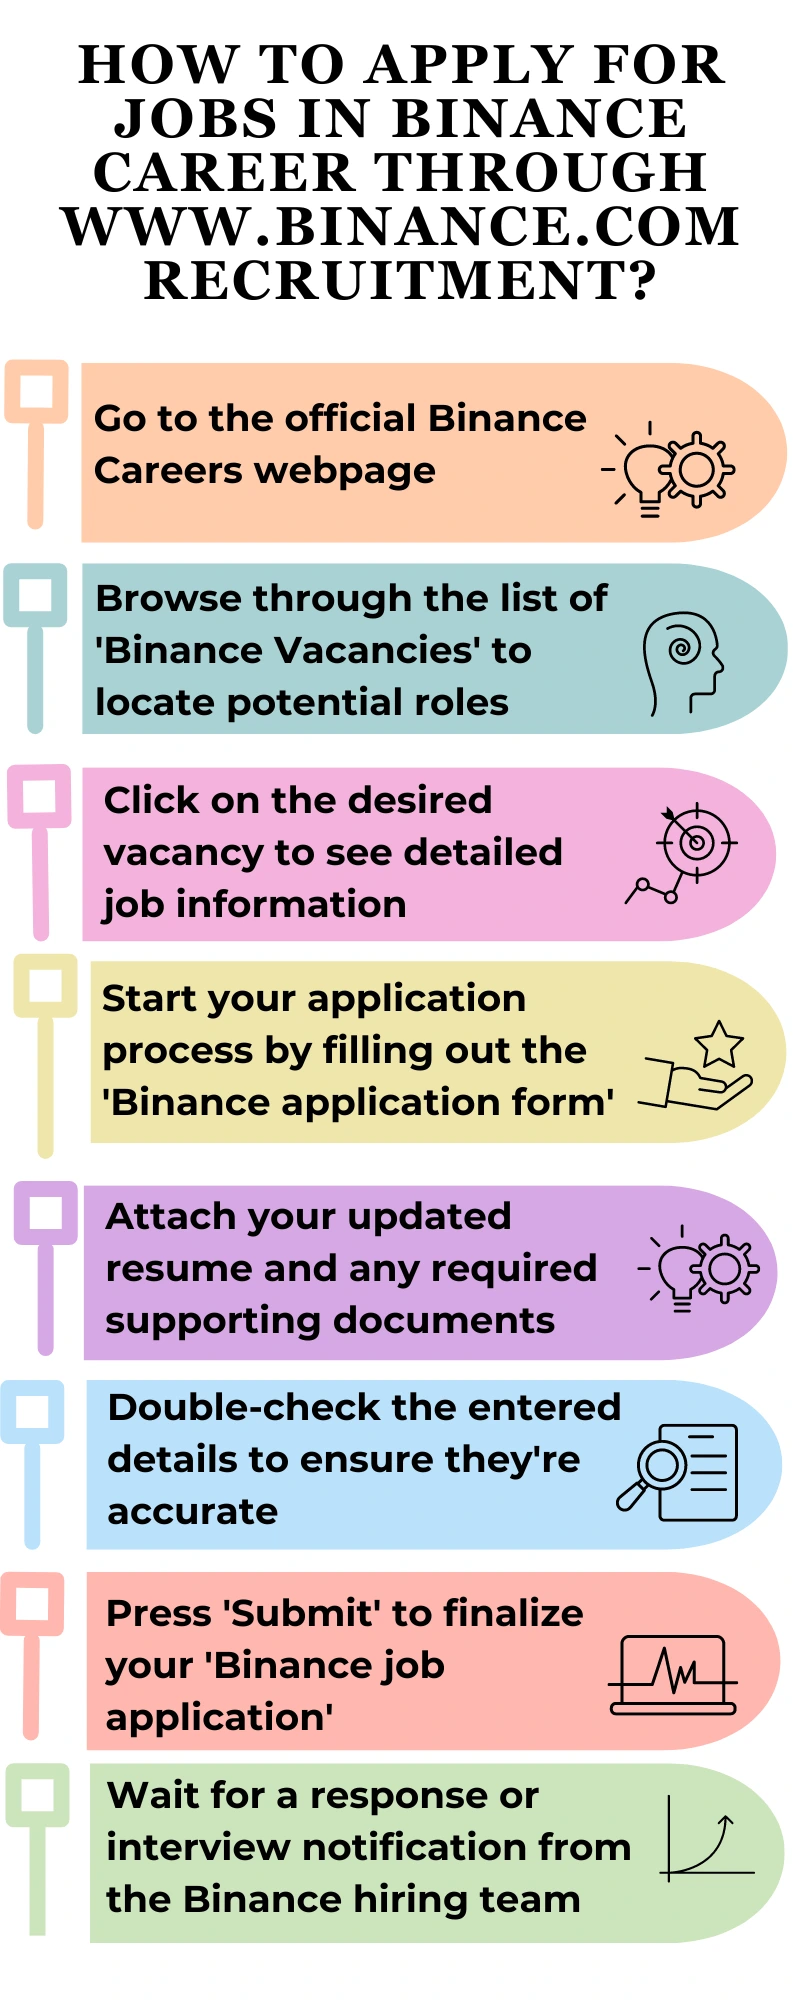 How to Apply for Jobs in Binance Career through www.binance.com recruitment?